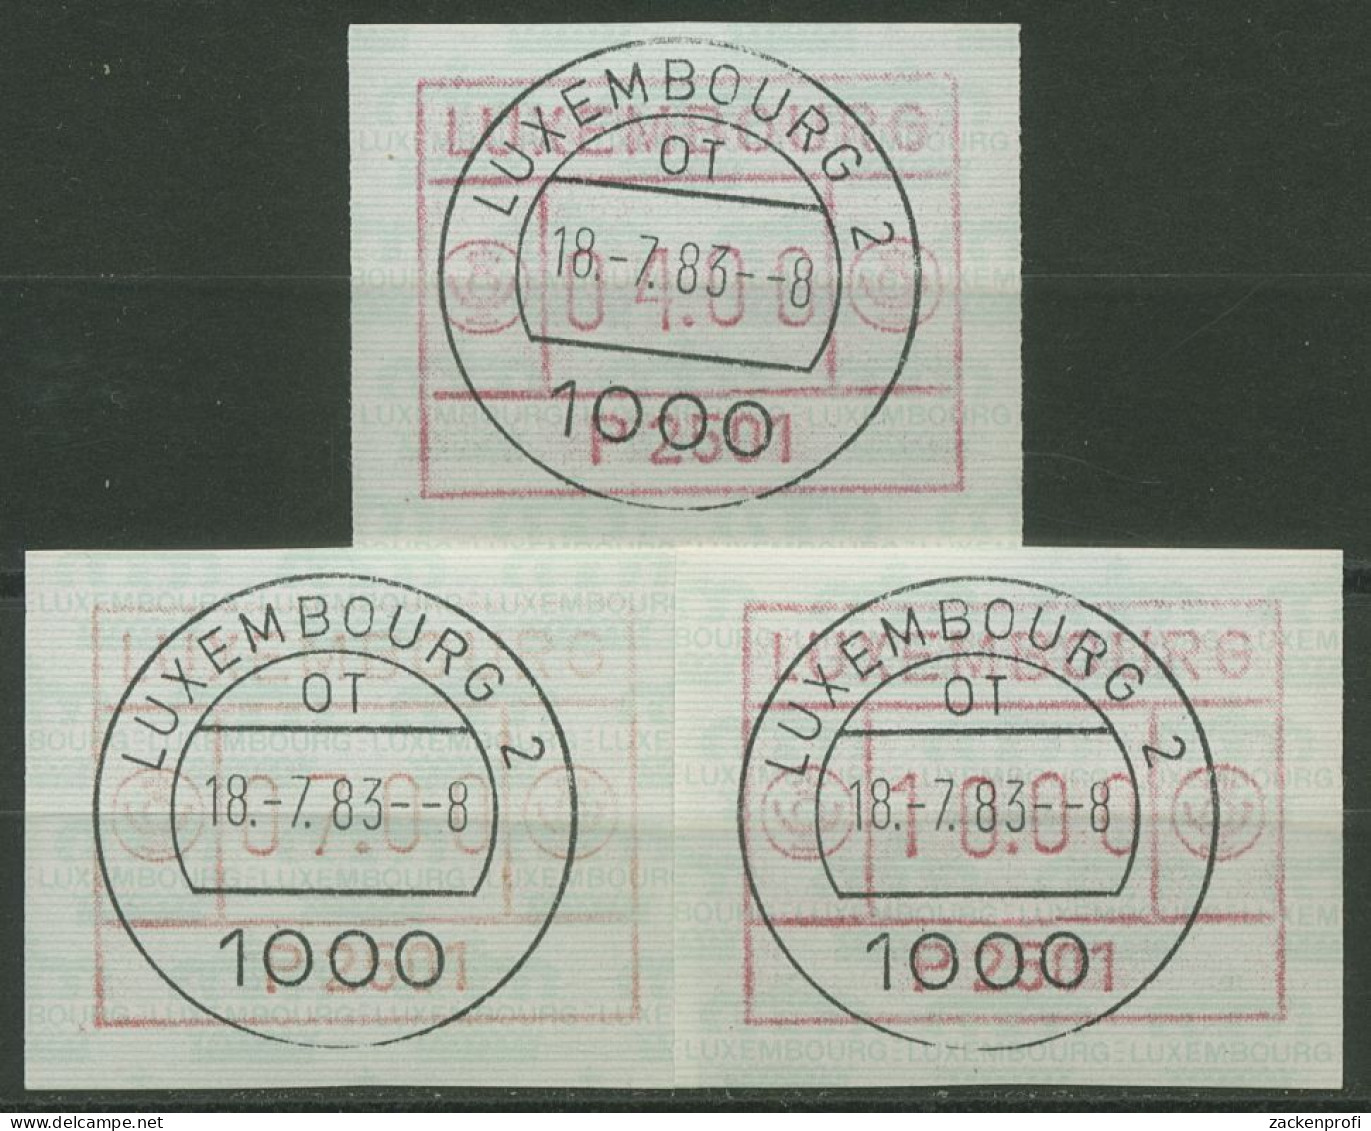 Luxemburg 1983 Automatenmarke Automat P 2501 Satz 1.1.1 B S1 Gestempelt - Postage Labels